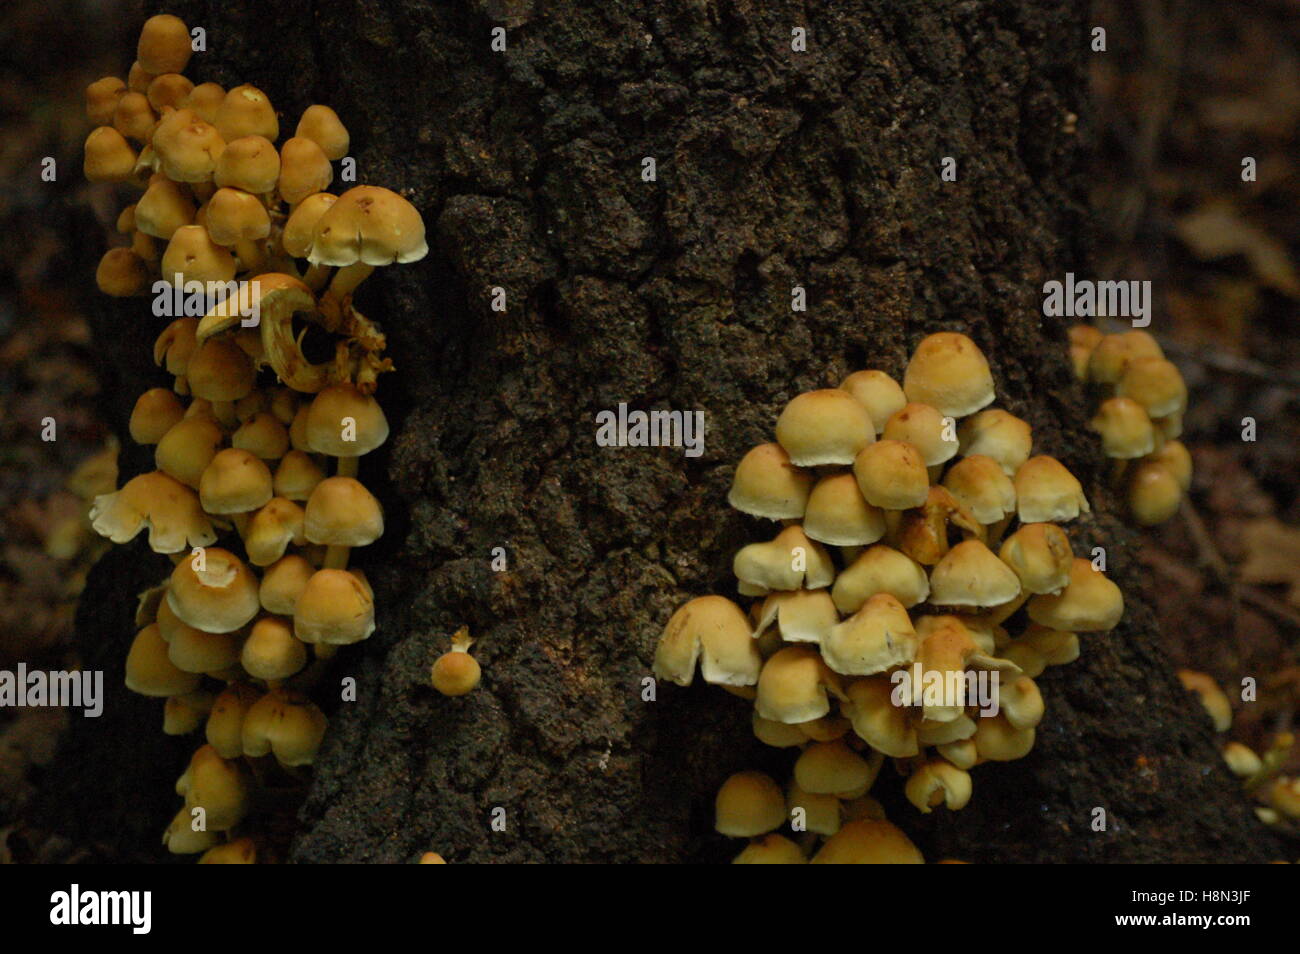 yellow mushroom fungus on tree stump Stock Photo